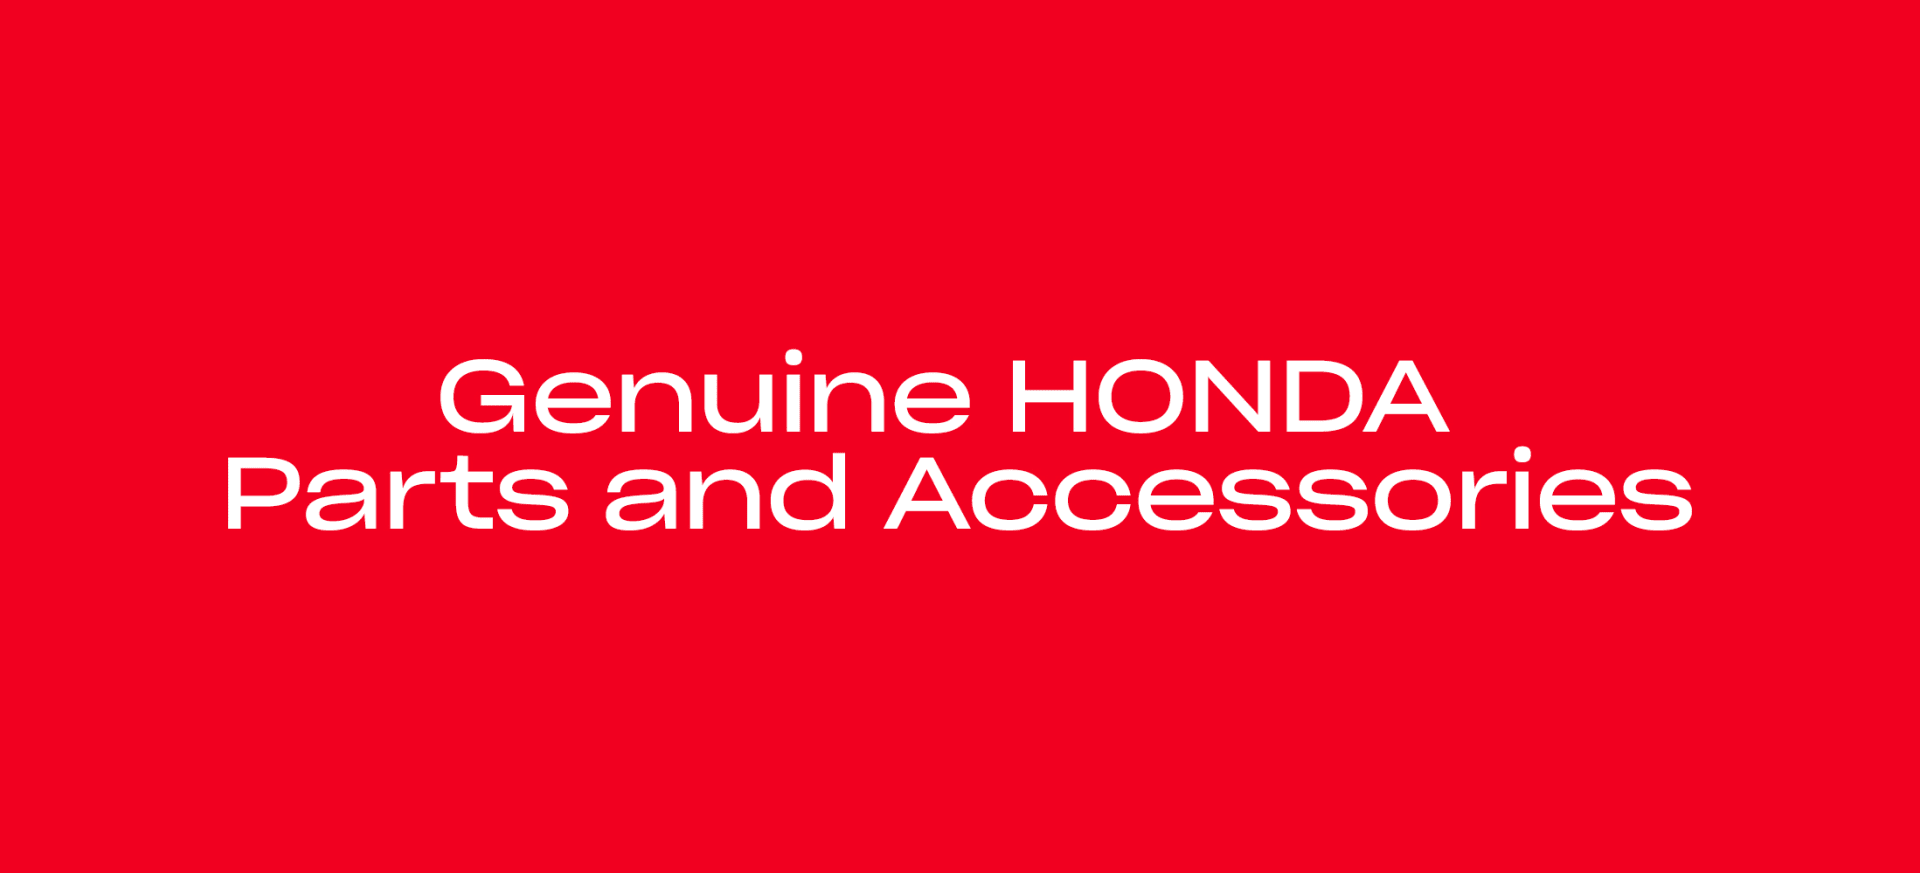 Genuine Honda Parts and Accessories